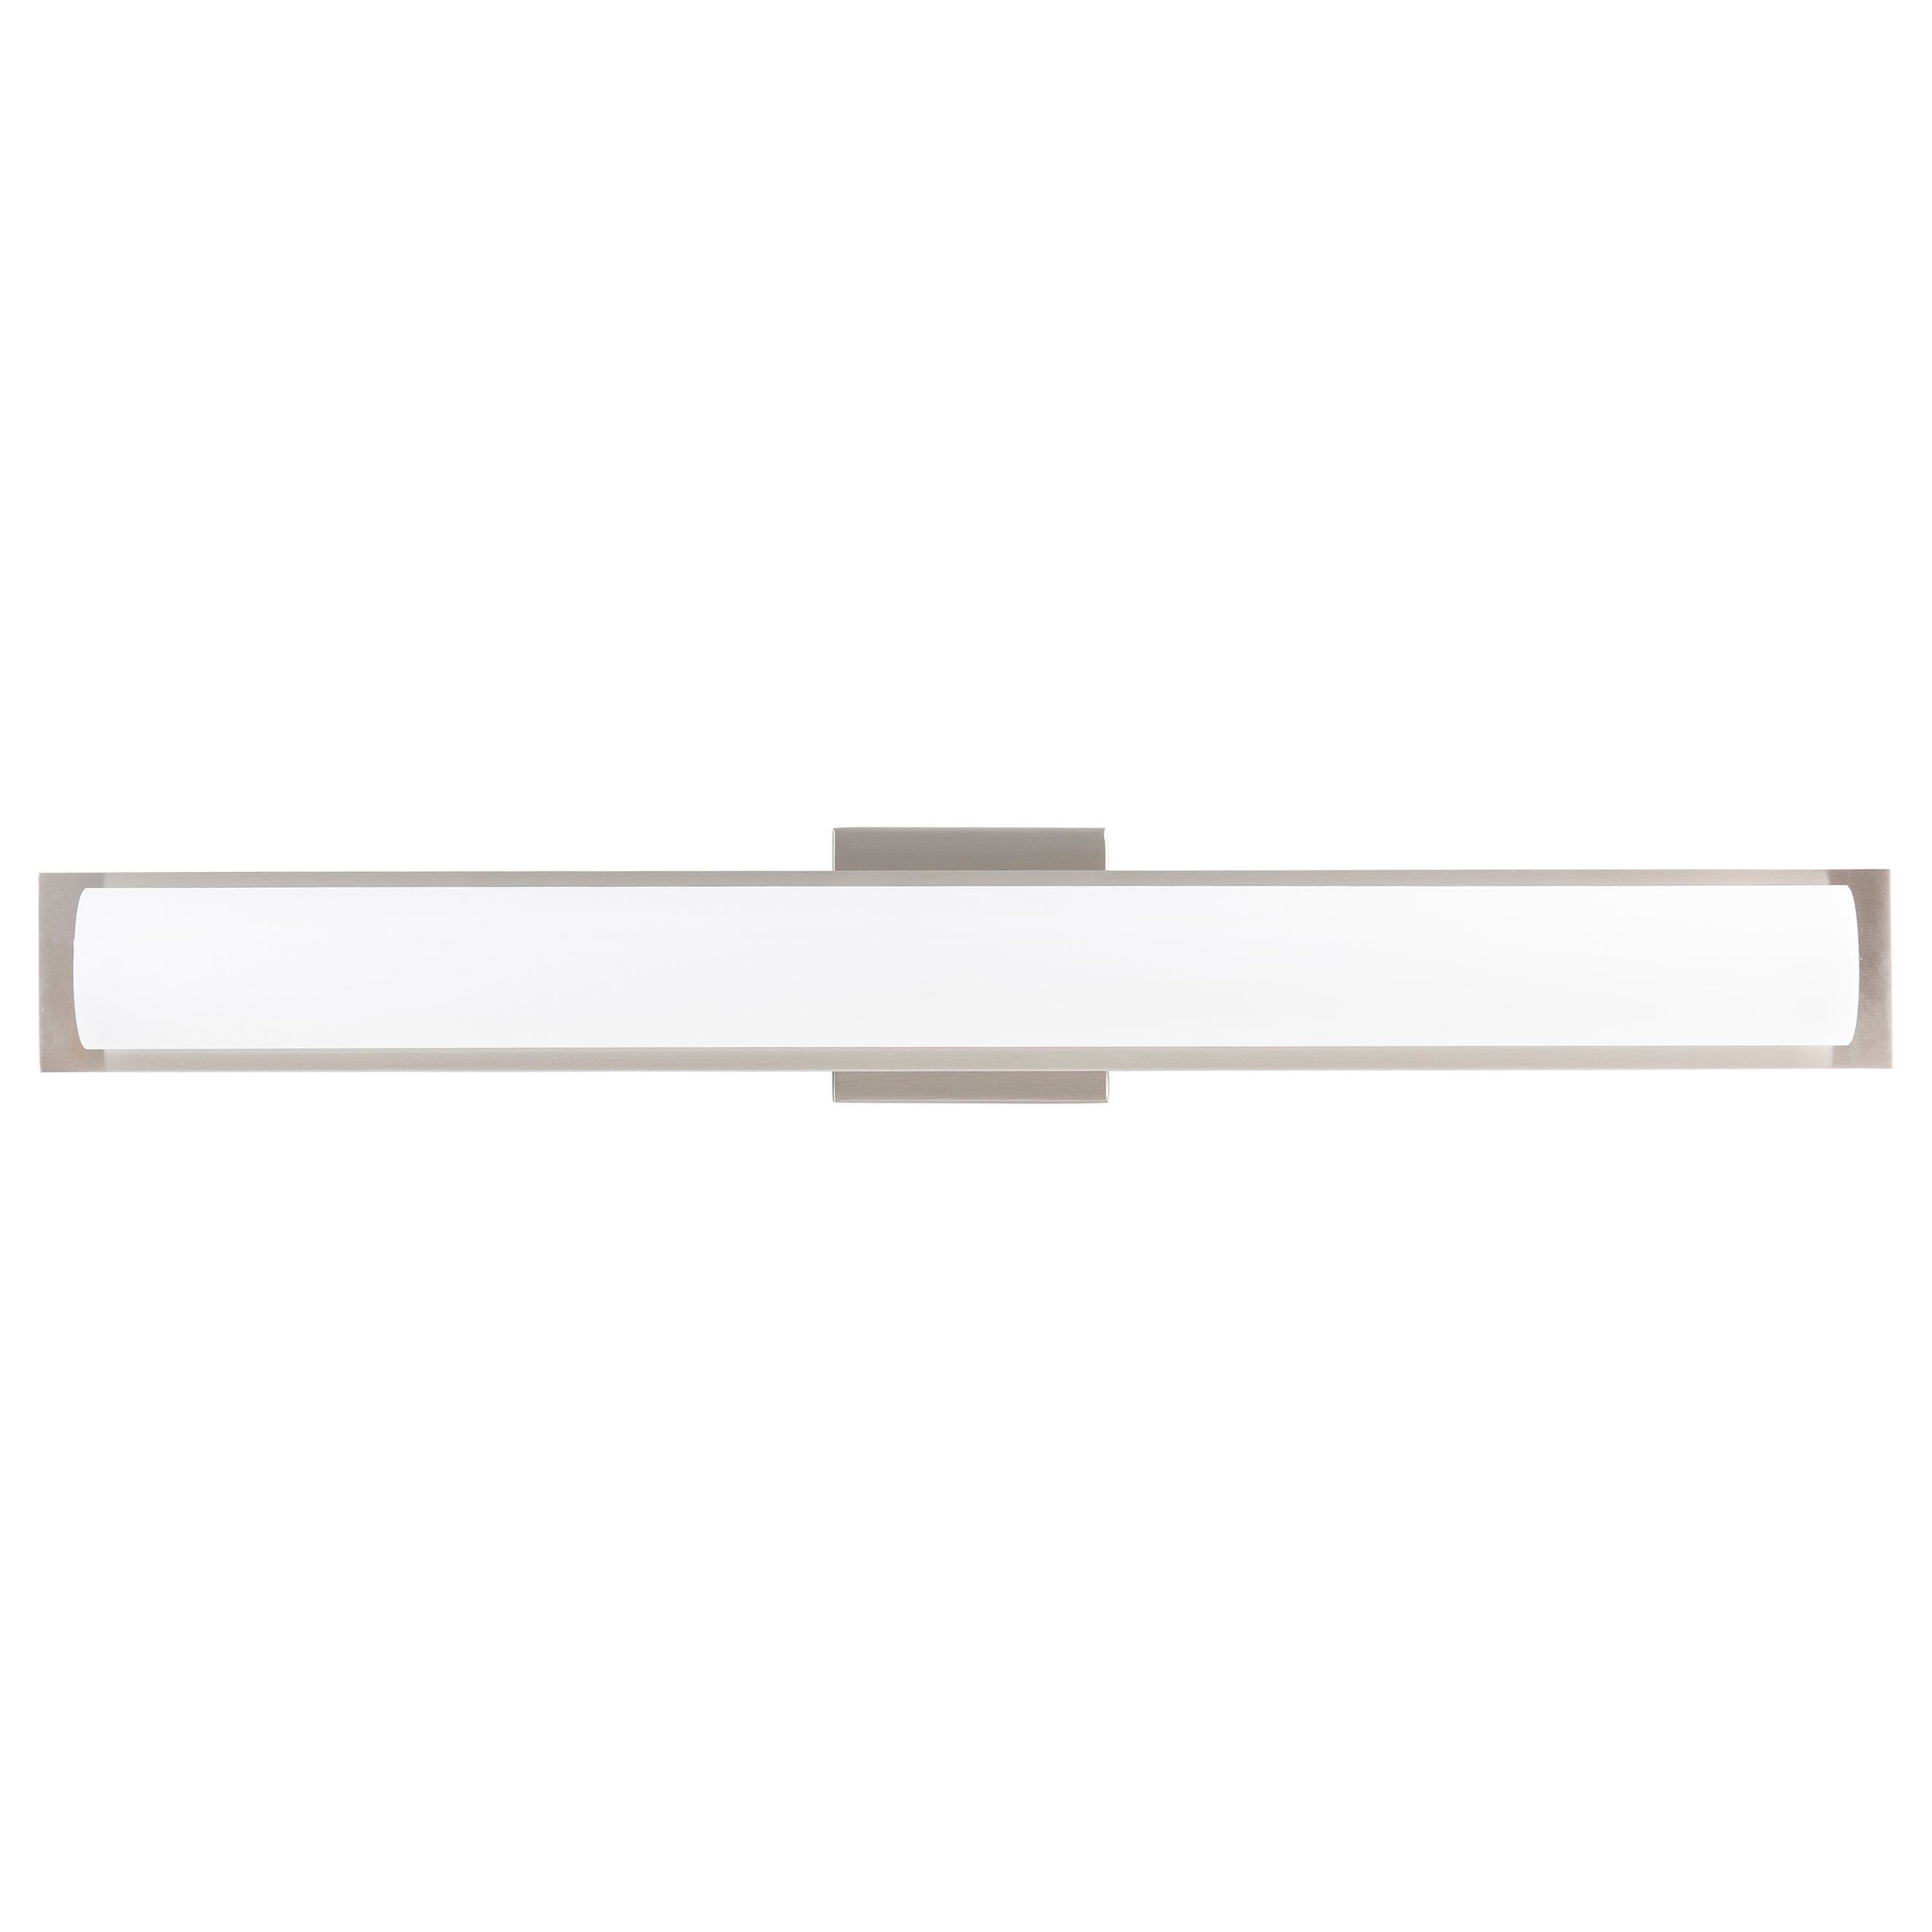 Portico 30 inch LED Bathroom Vanity Light, Integrated LED Light Strip